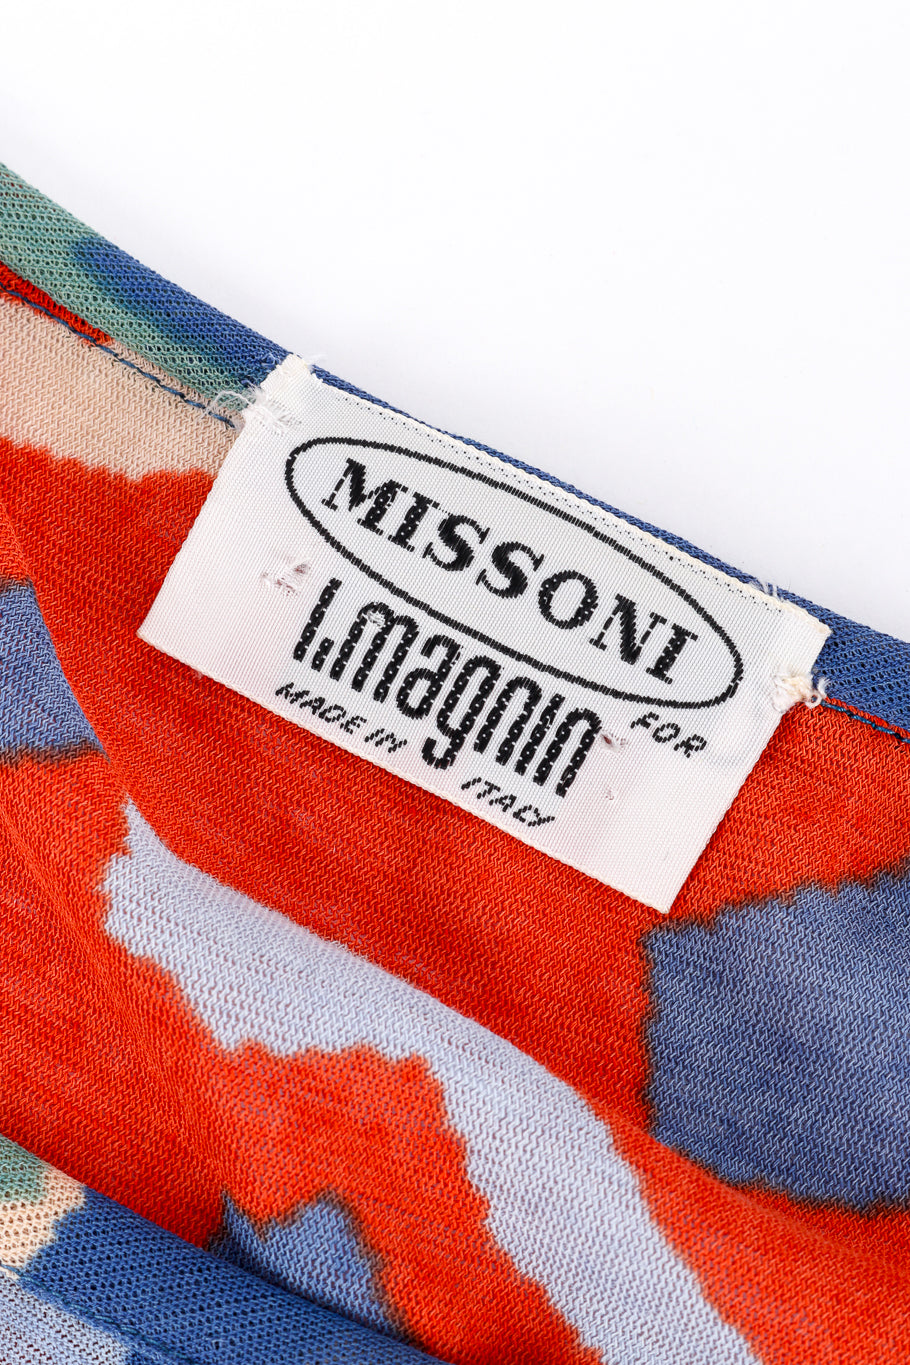 Vintage Missoni Abstract Print Dress signature label @recess la